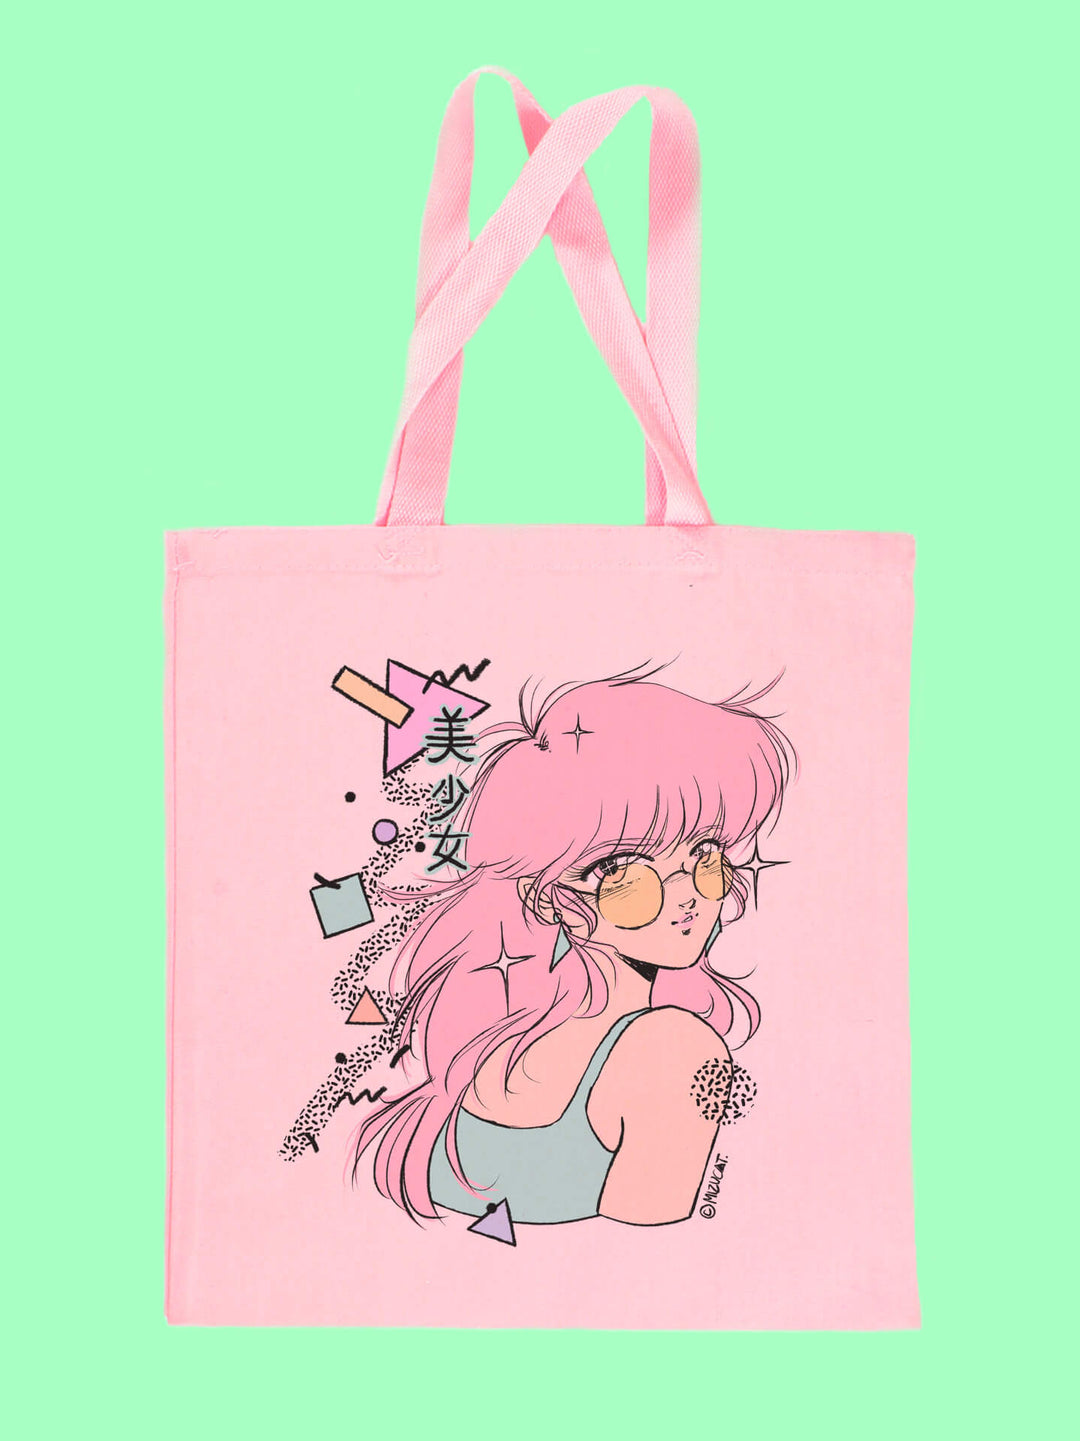 Beautiful pink hair retro anime girl aesthetics pink canvas bag by Manga style artist Mizucat.